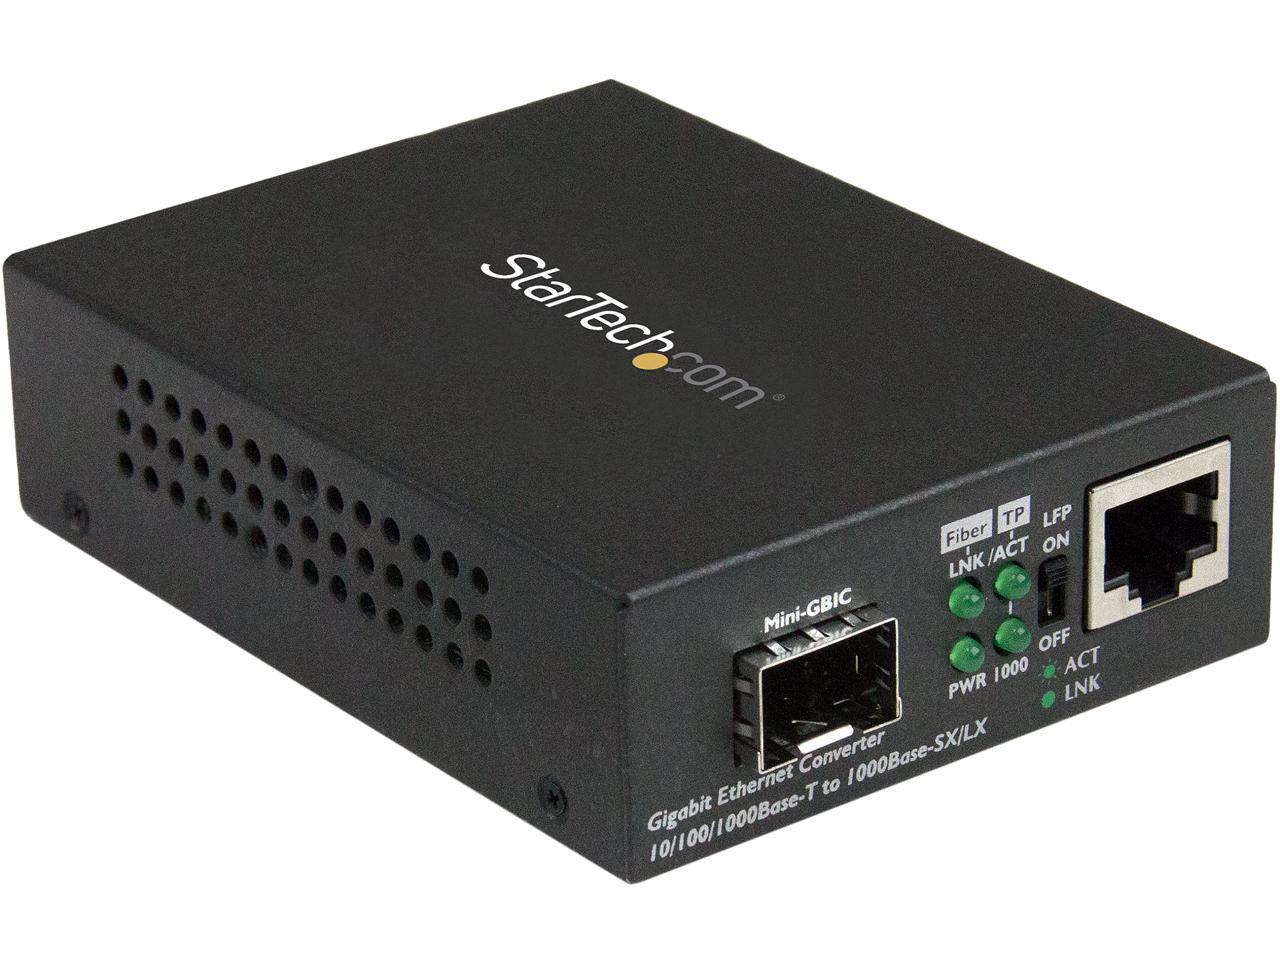 StarTech.com Gigabit Ethernet Fiber Media Converter with Open SFP Slot - Support - $120.99